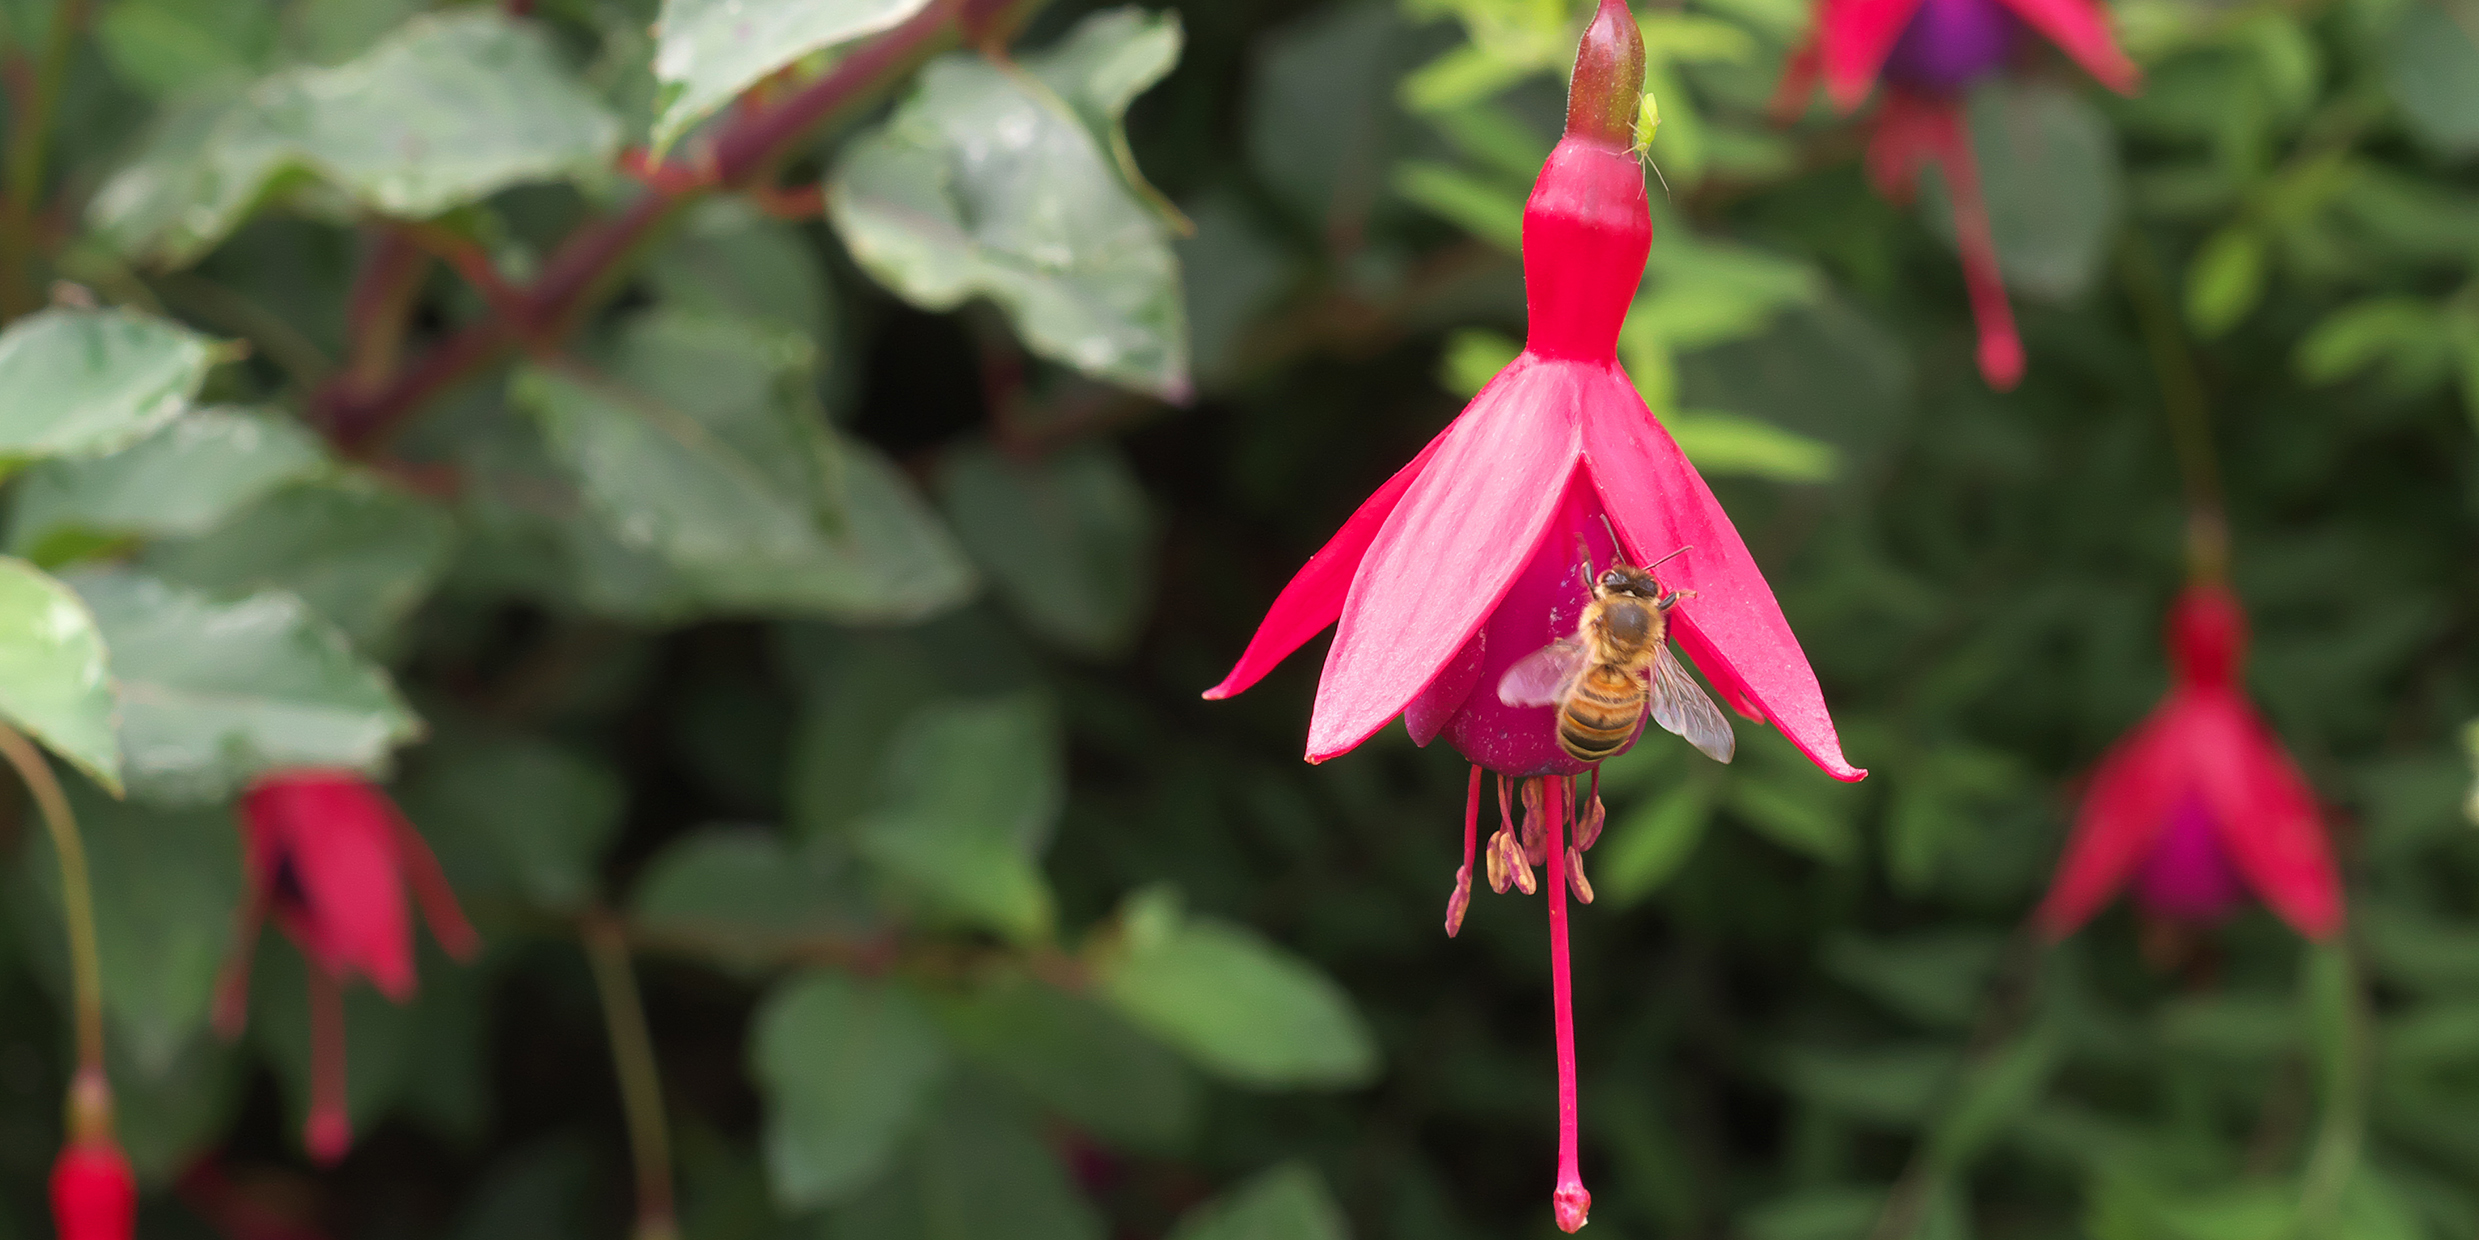 Image of a honey bee feeding on a fuchsia flower